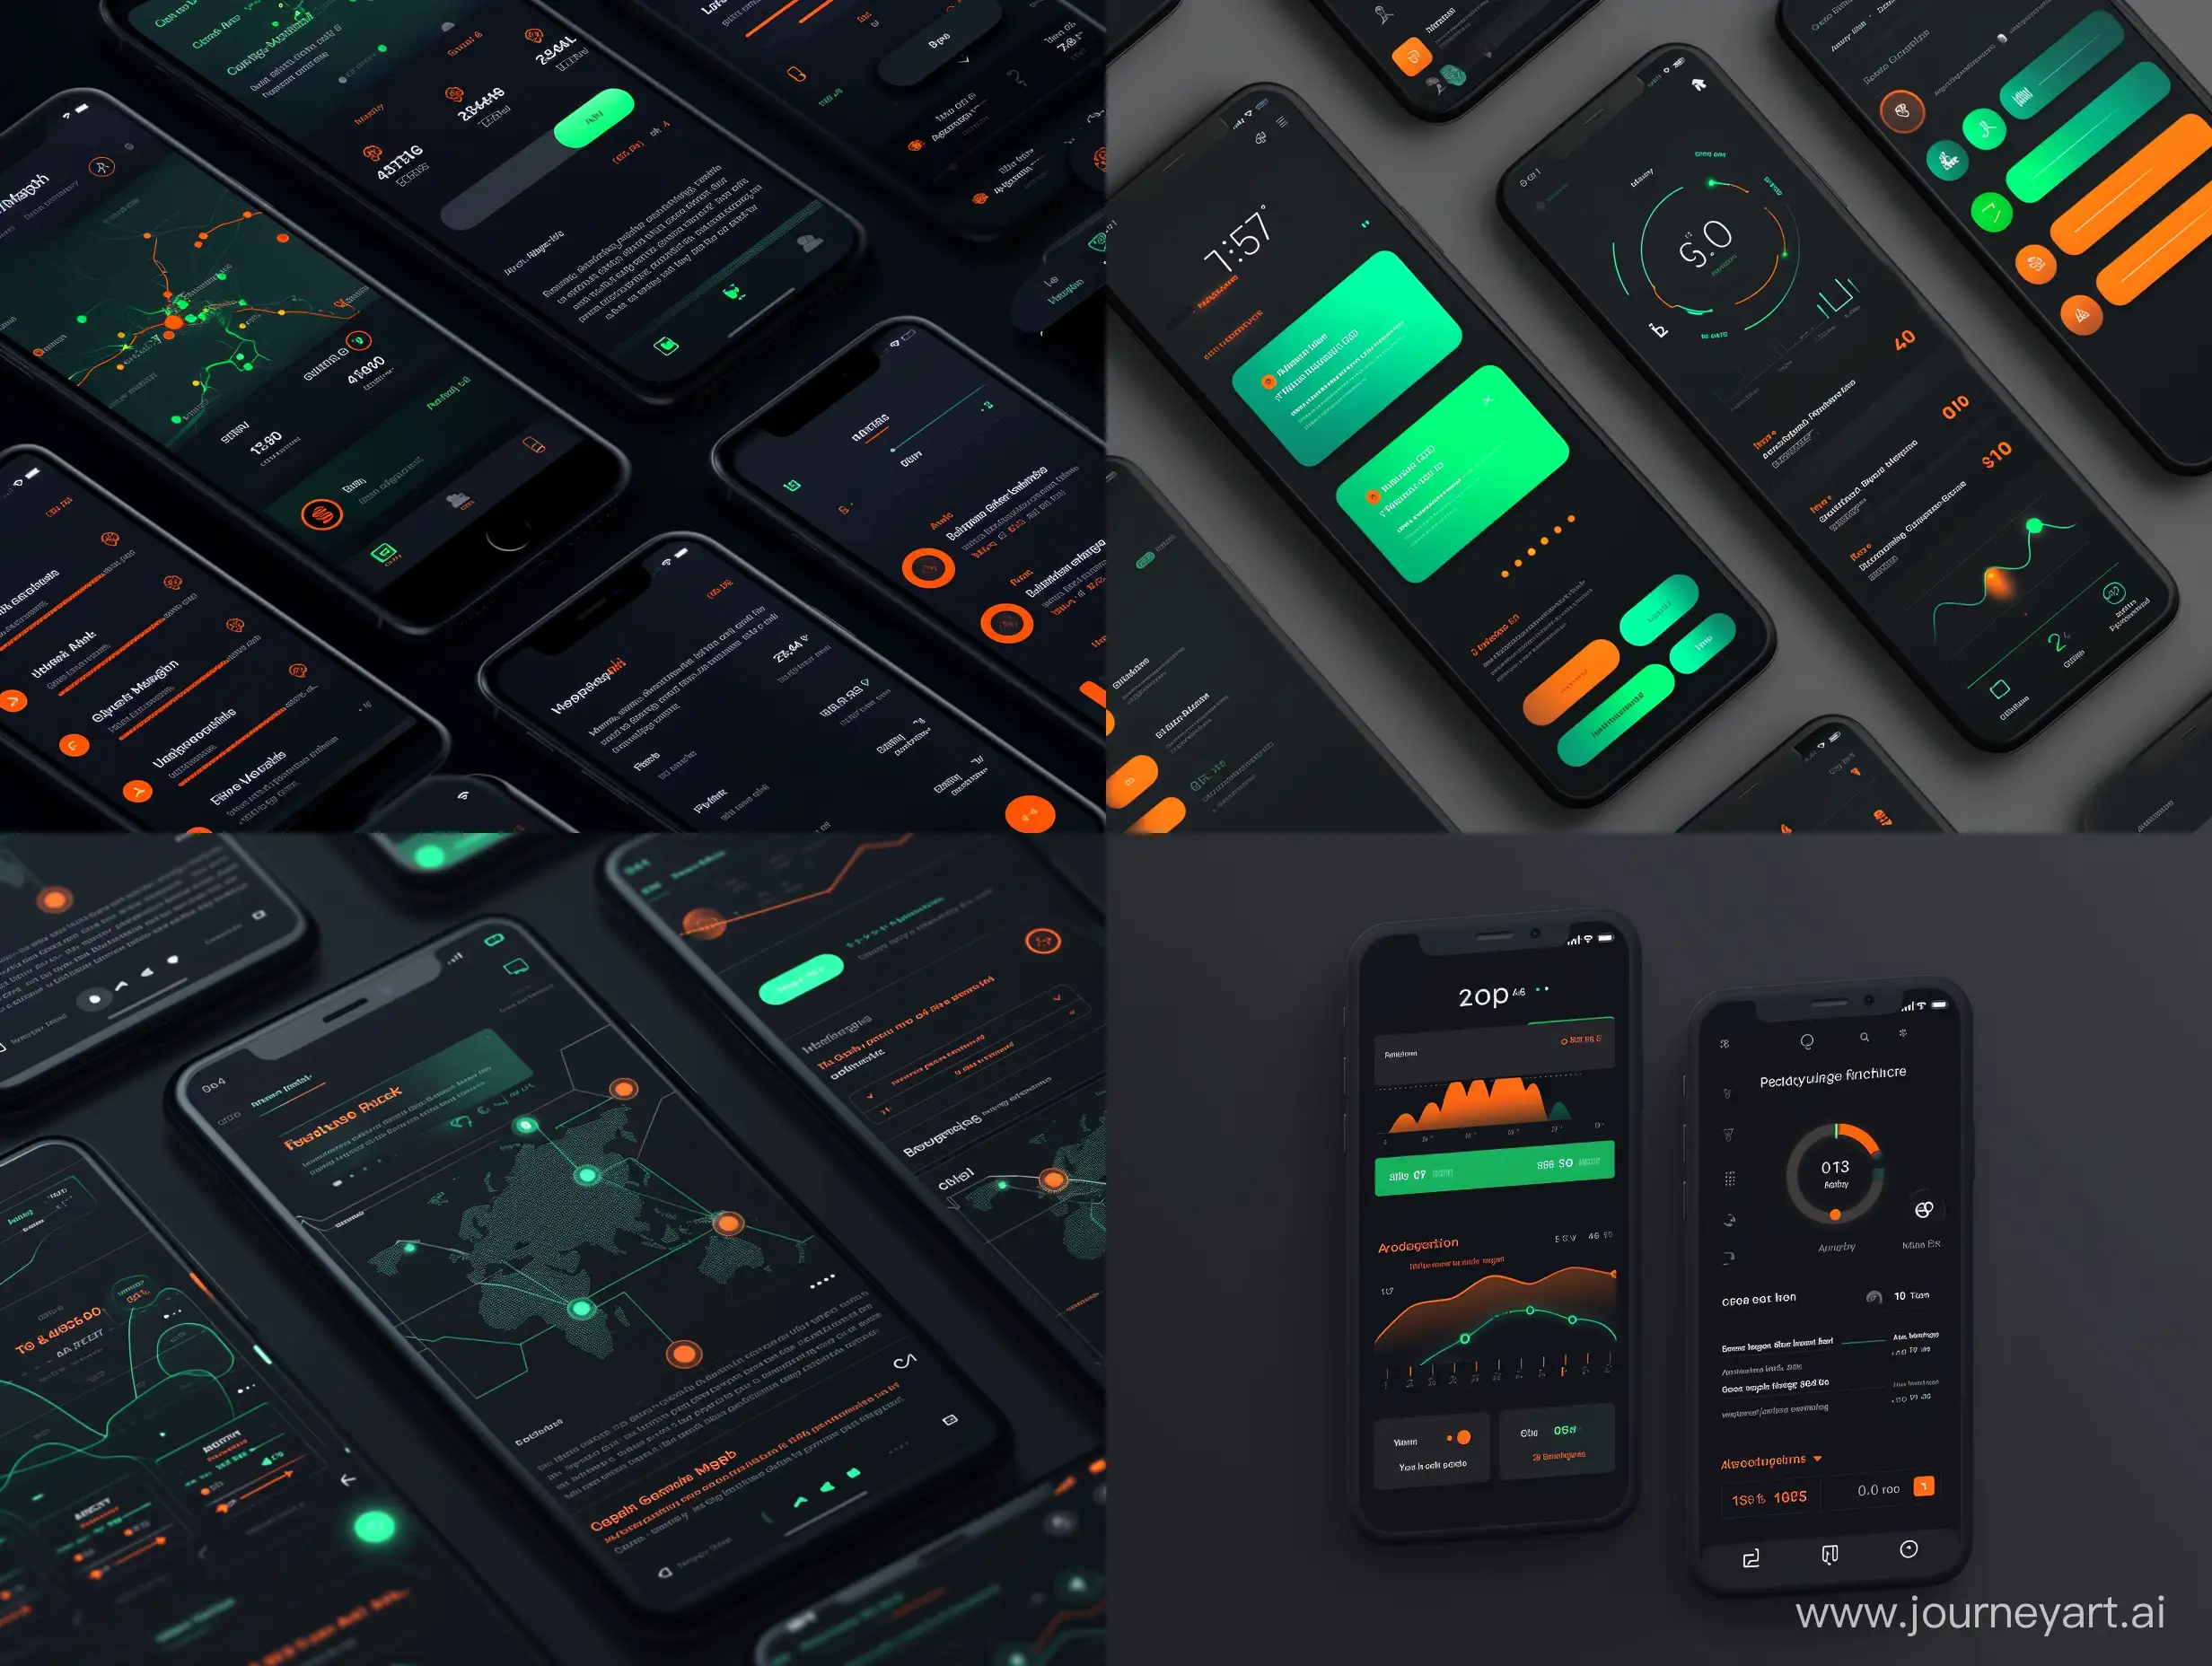 tech inspired ios app
main color : dark
main accent : green
light accent : orange